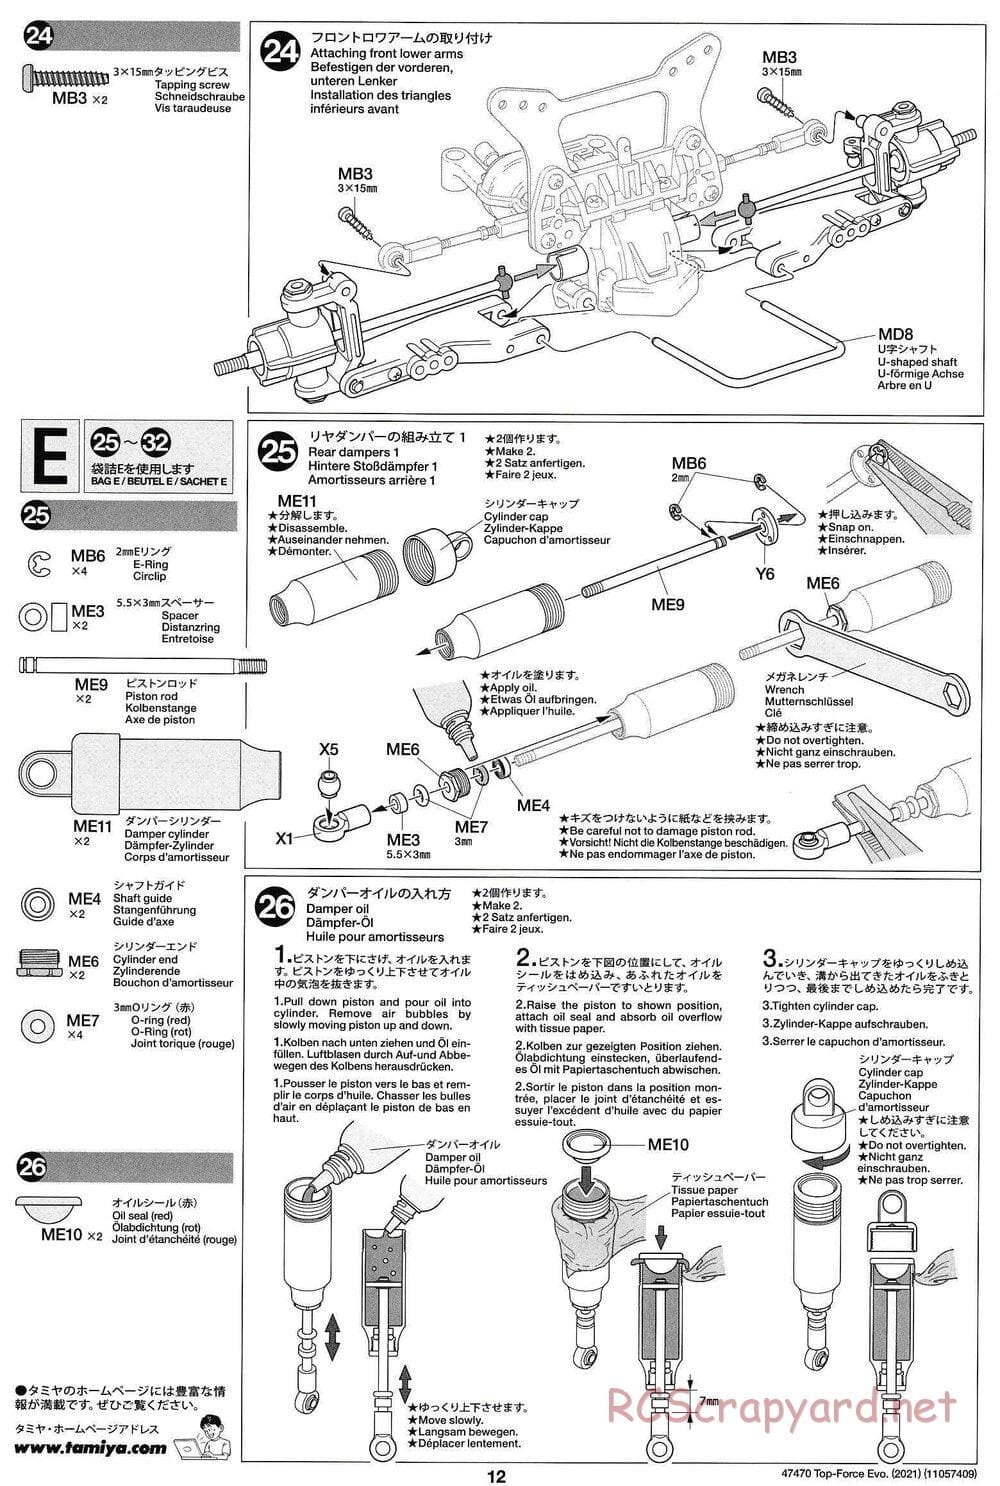 Tamiya - Top Force Evo 2021 - DF-01 Chassis - Manual - Page 12